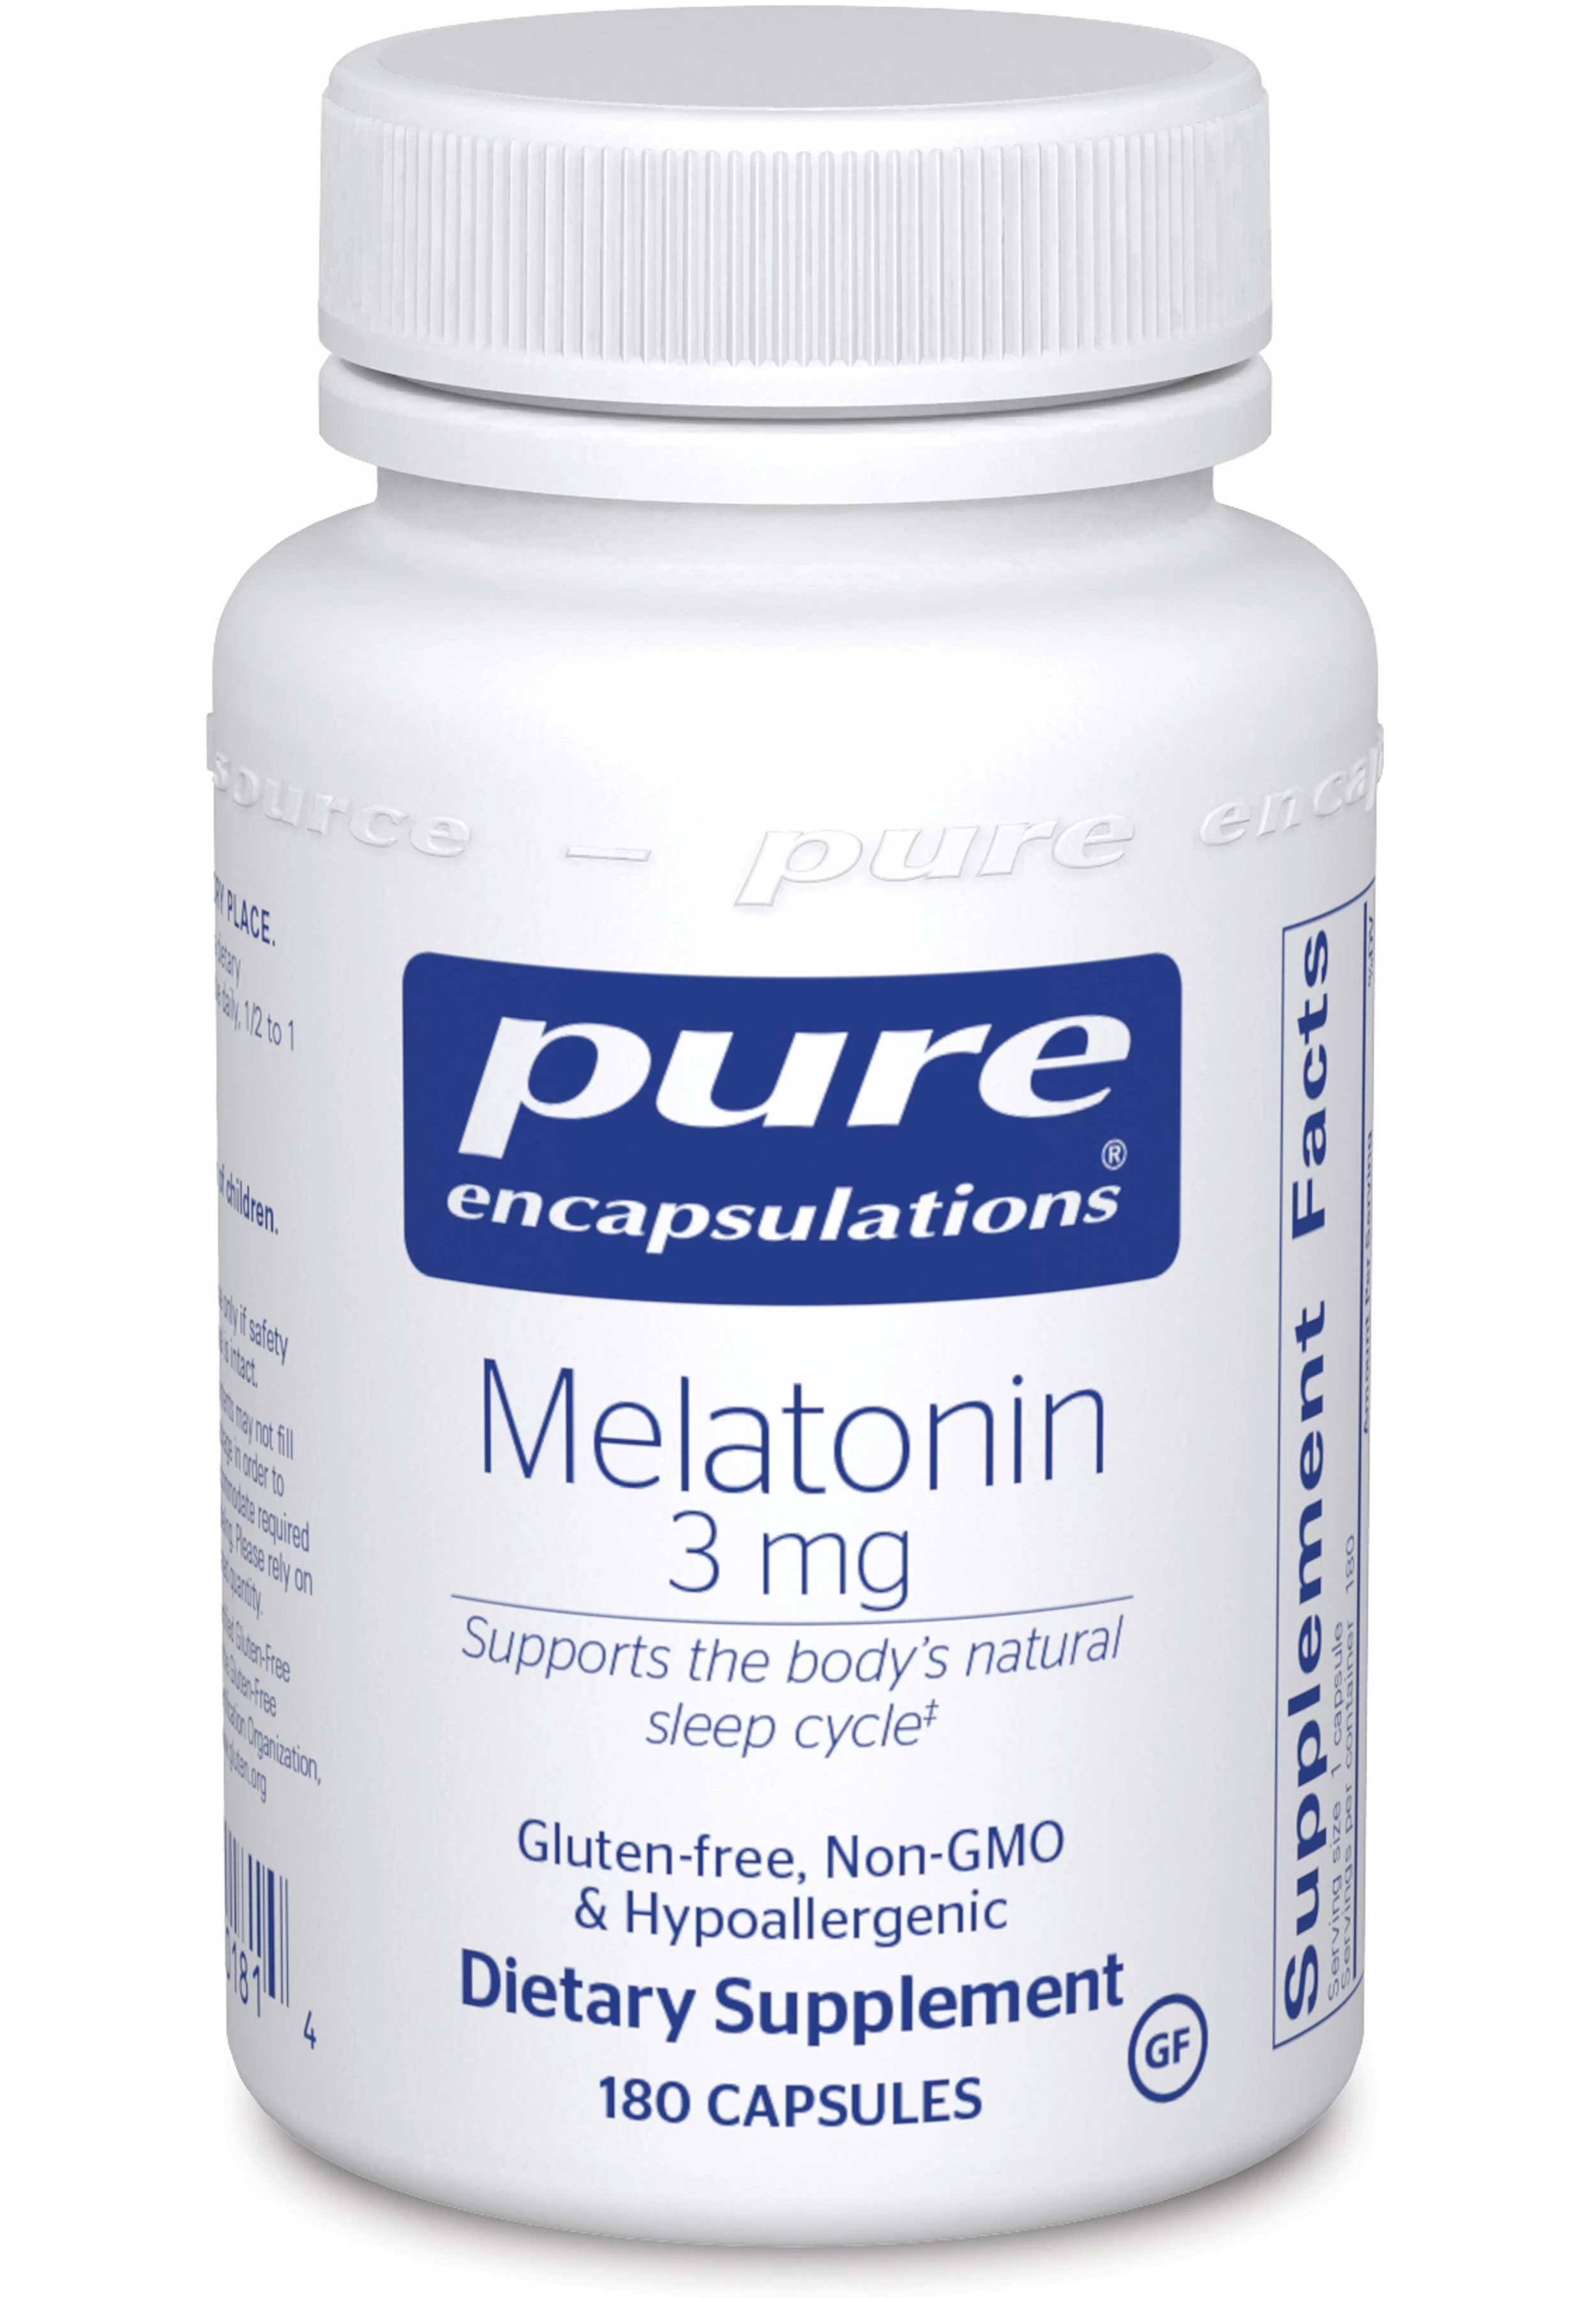 Pure Encapsulations Melatonin - 3mg, 60 Capsules